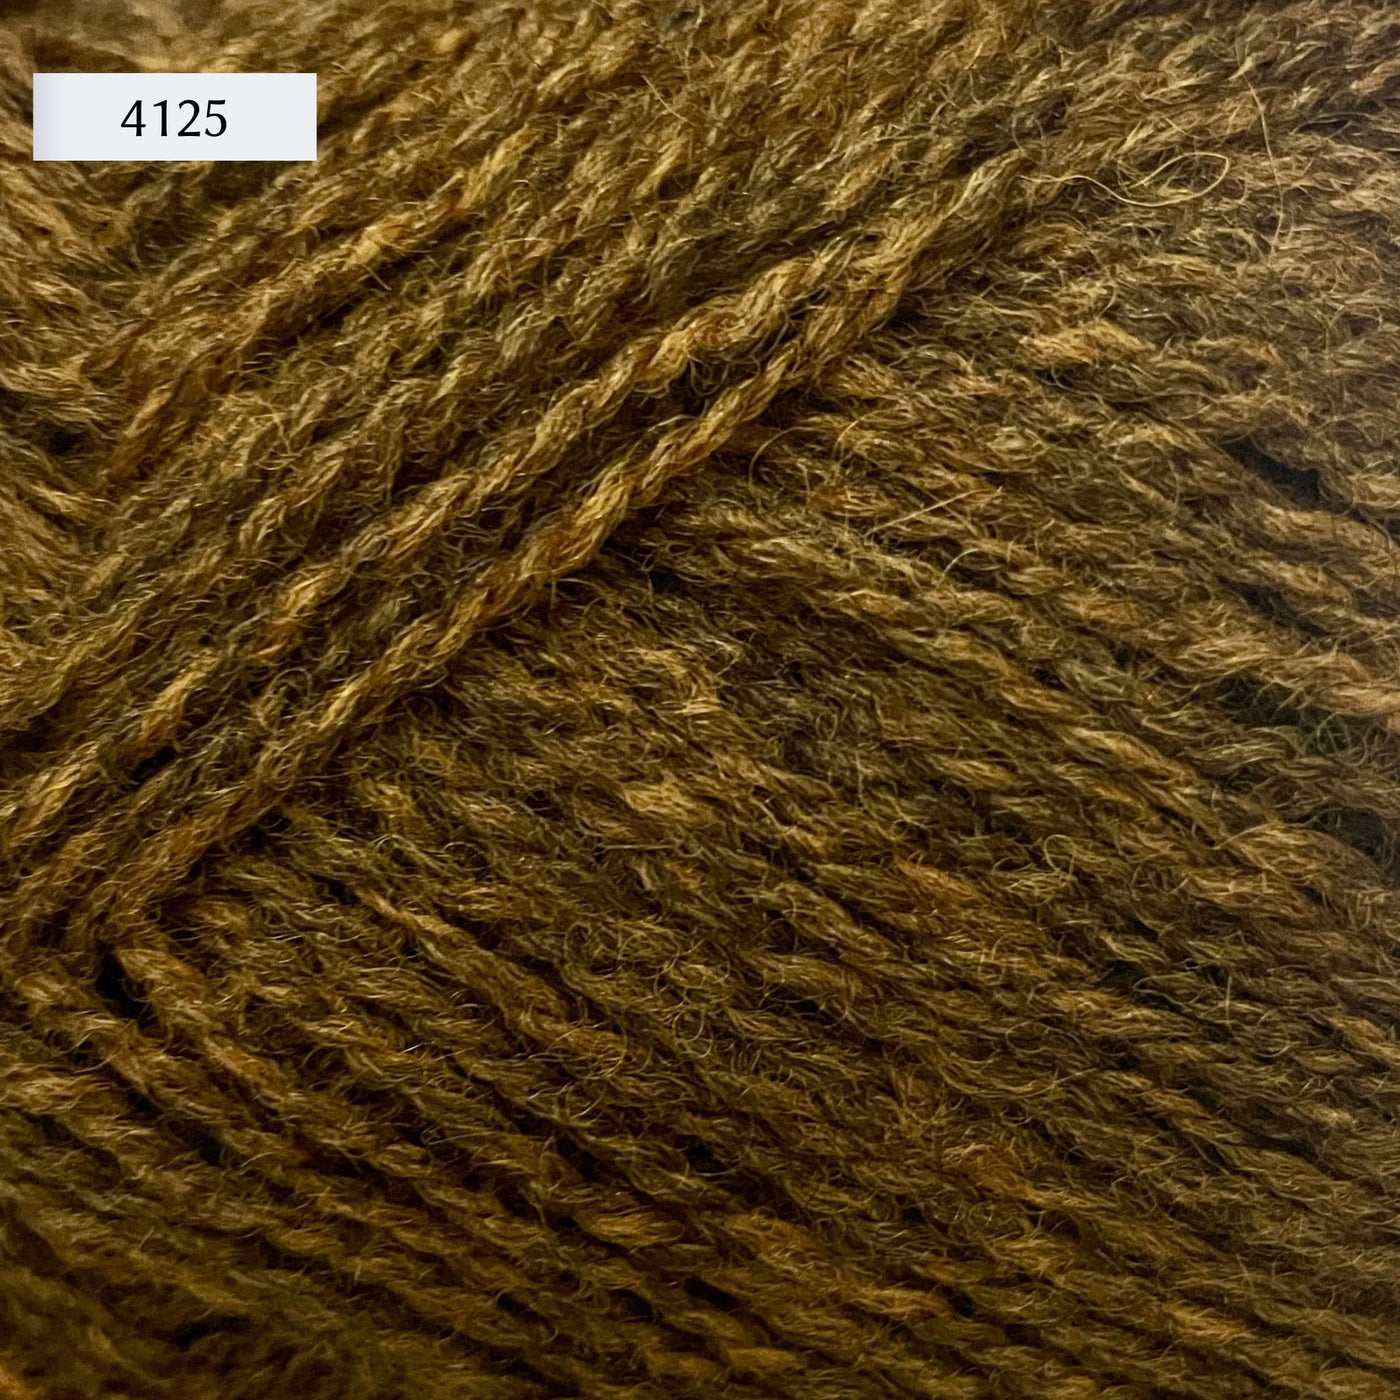 Rauma Finullgarn, a fingering/sport weight yarn, in color 4125, a heathered mustard gold